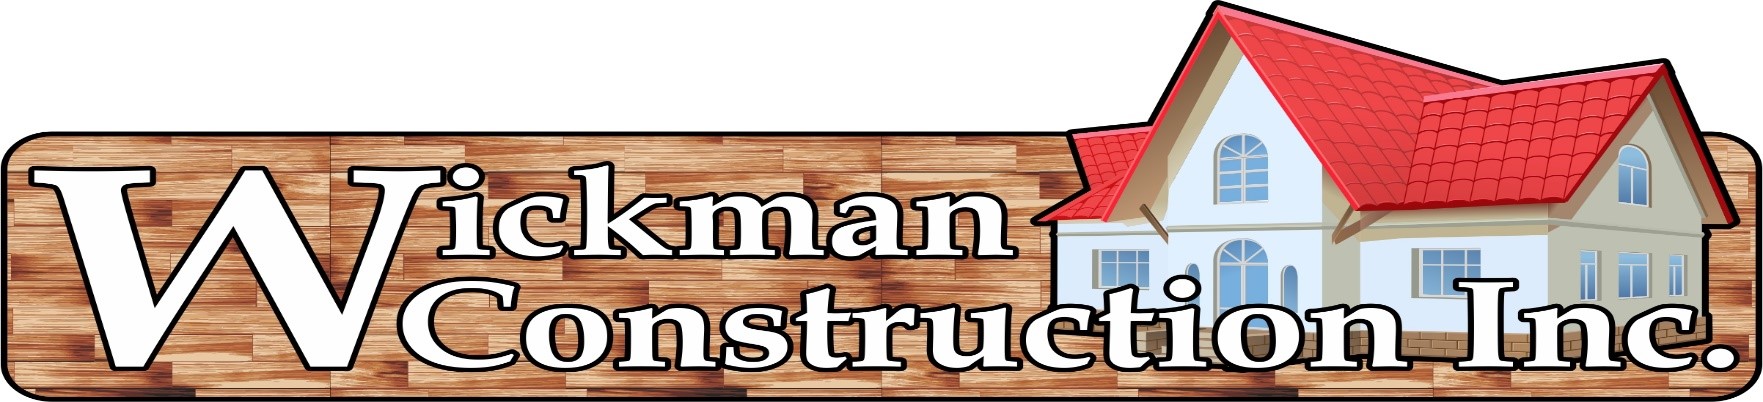 Wickman Construction, Inc. Logo